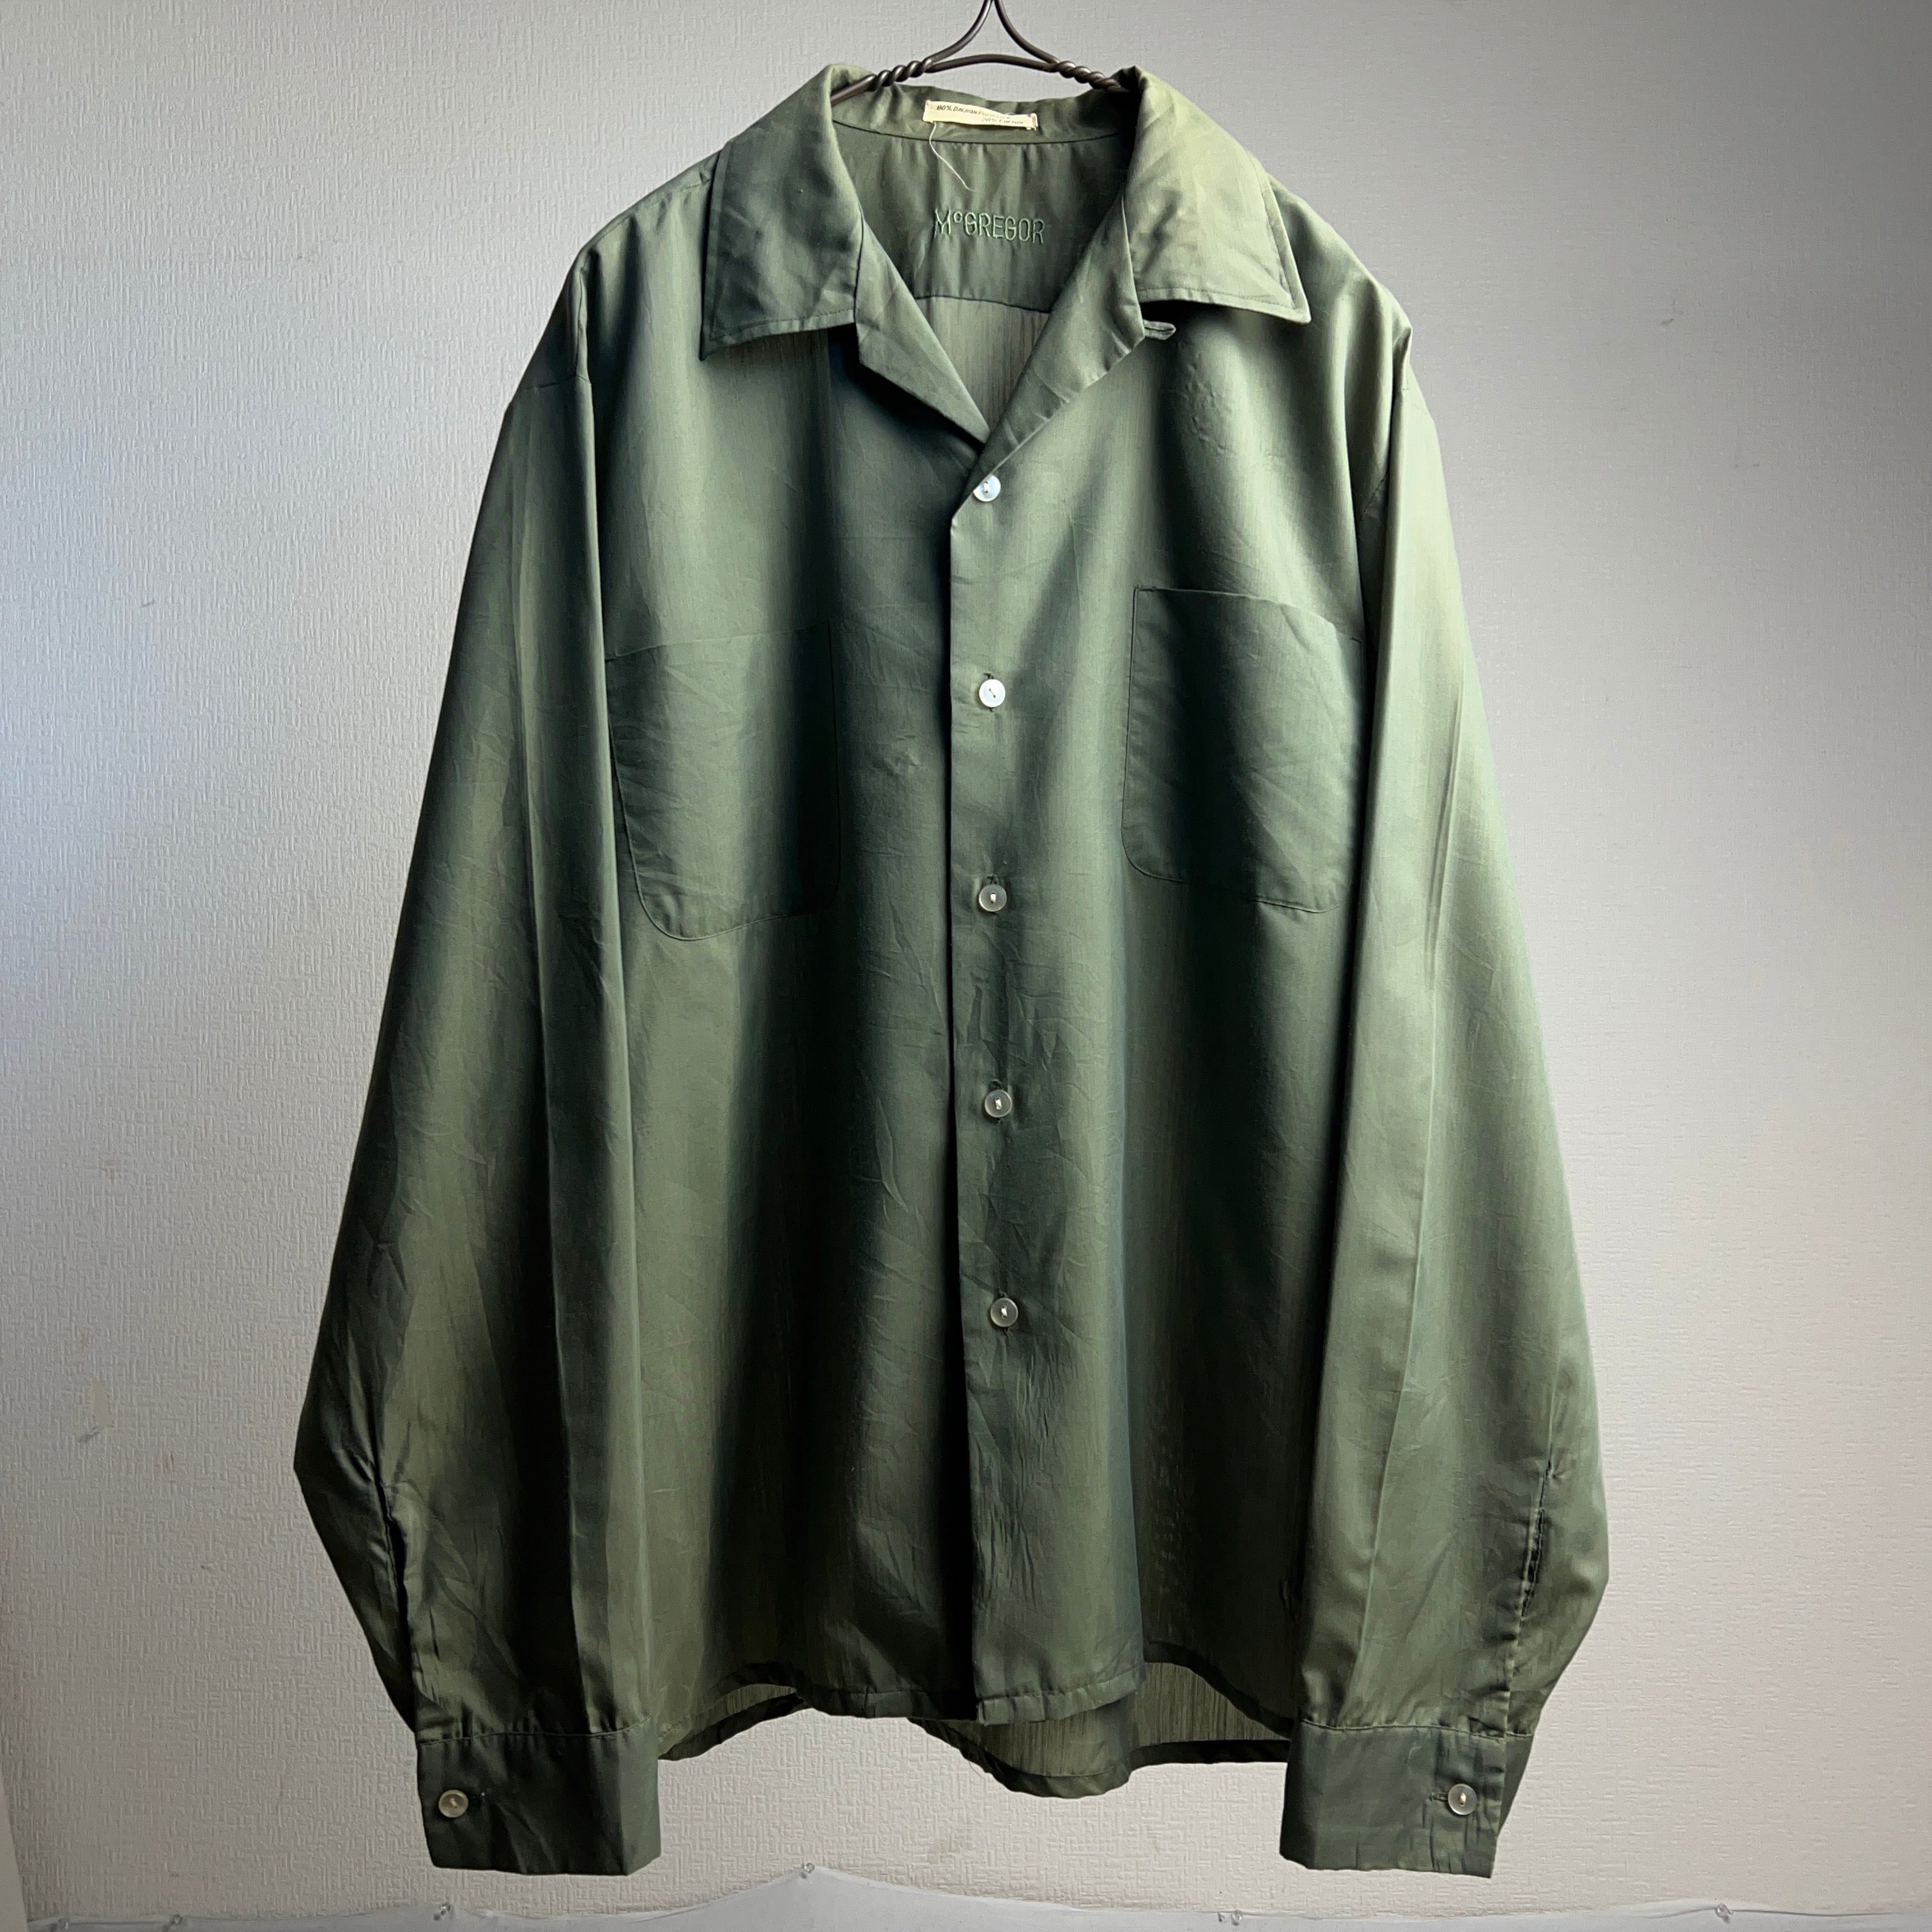 60~70's “McGREGOR” Poly Cotton Shirt USA製 SIZE L 60年代 70 